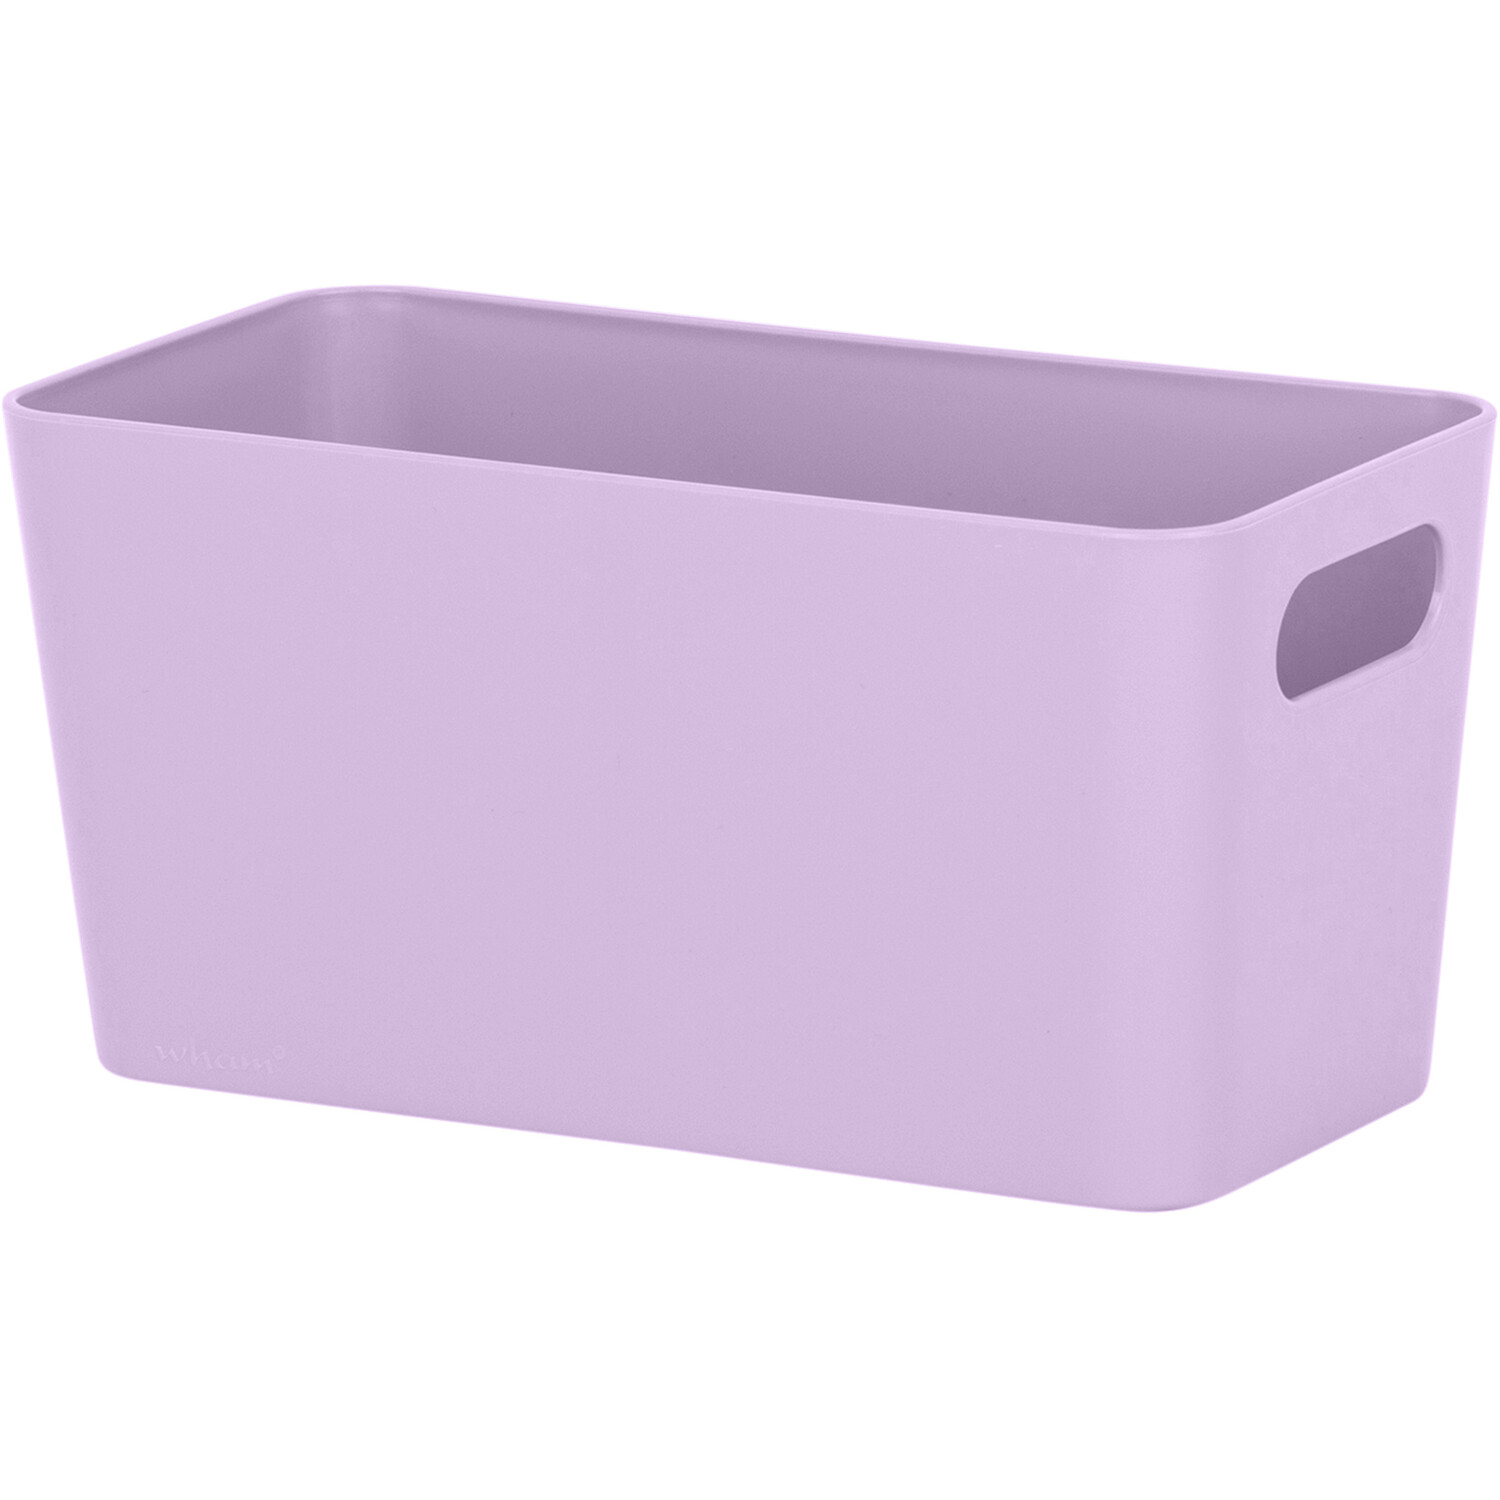 Studio Storage Basket  - Lilac / 300g Image 1